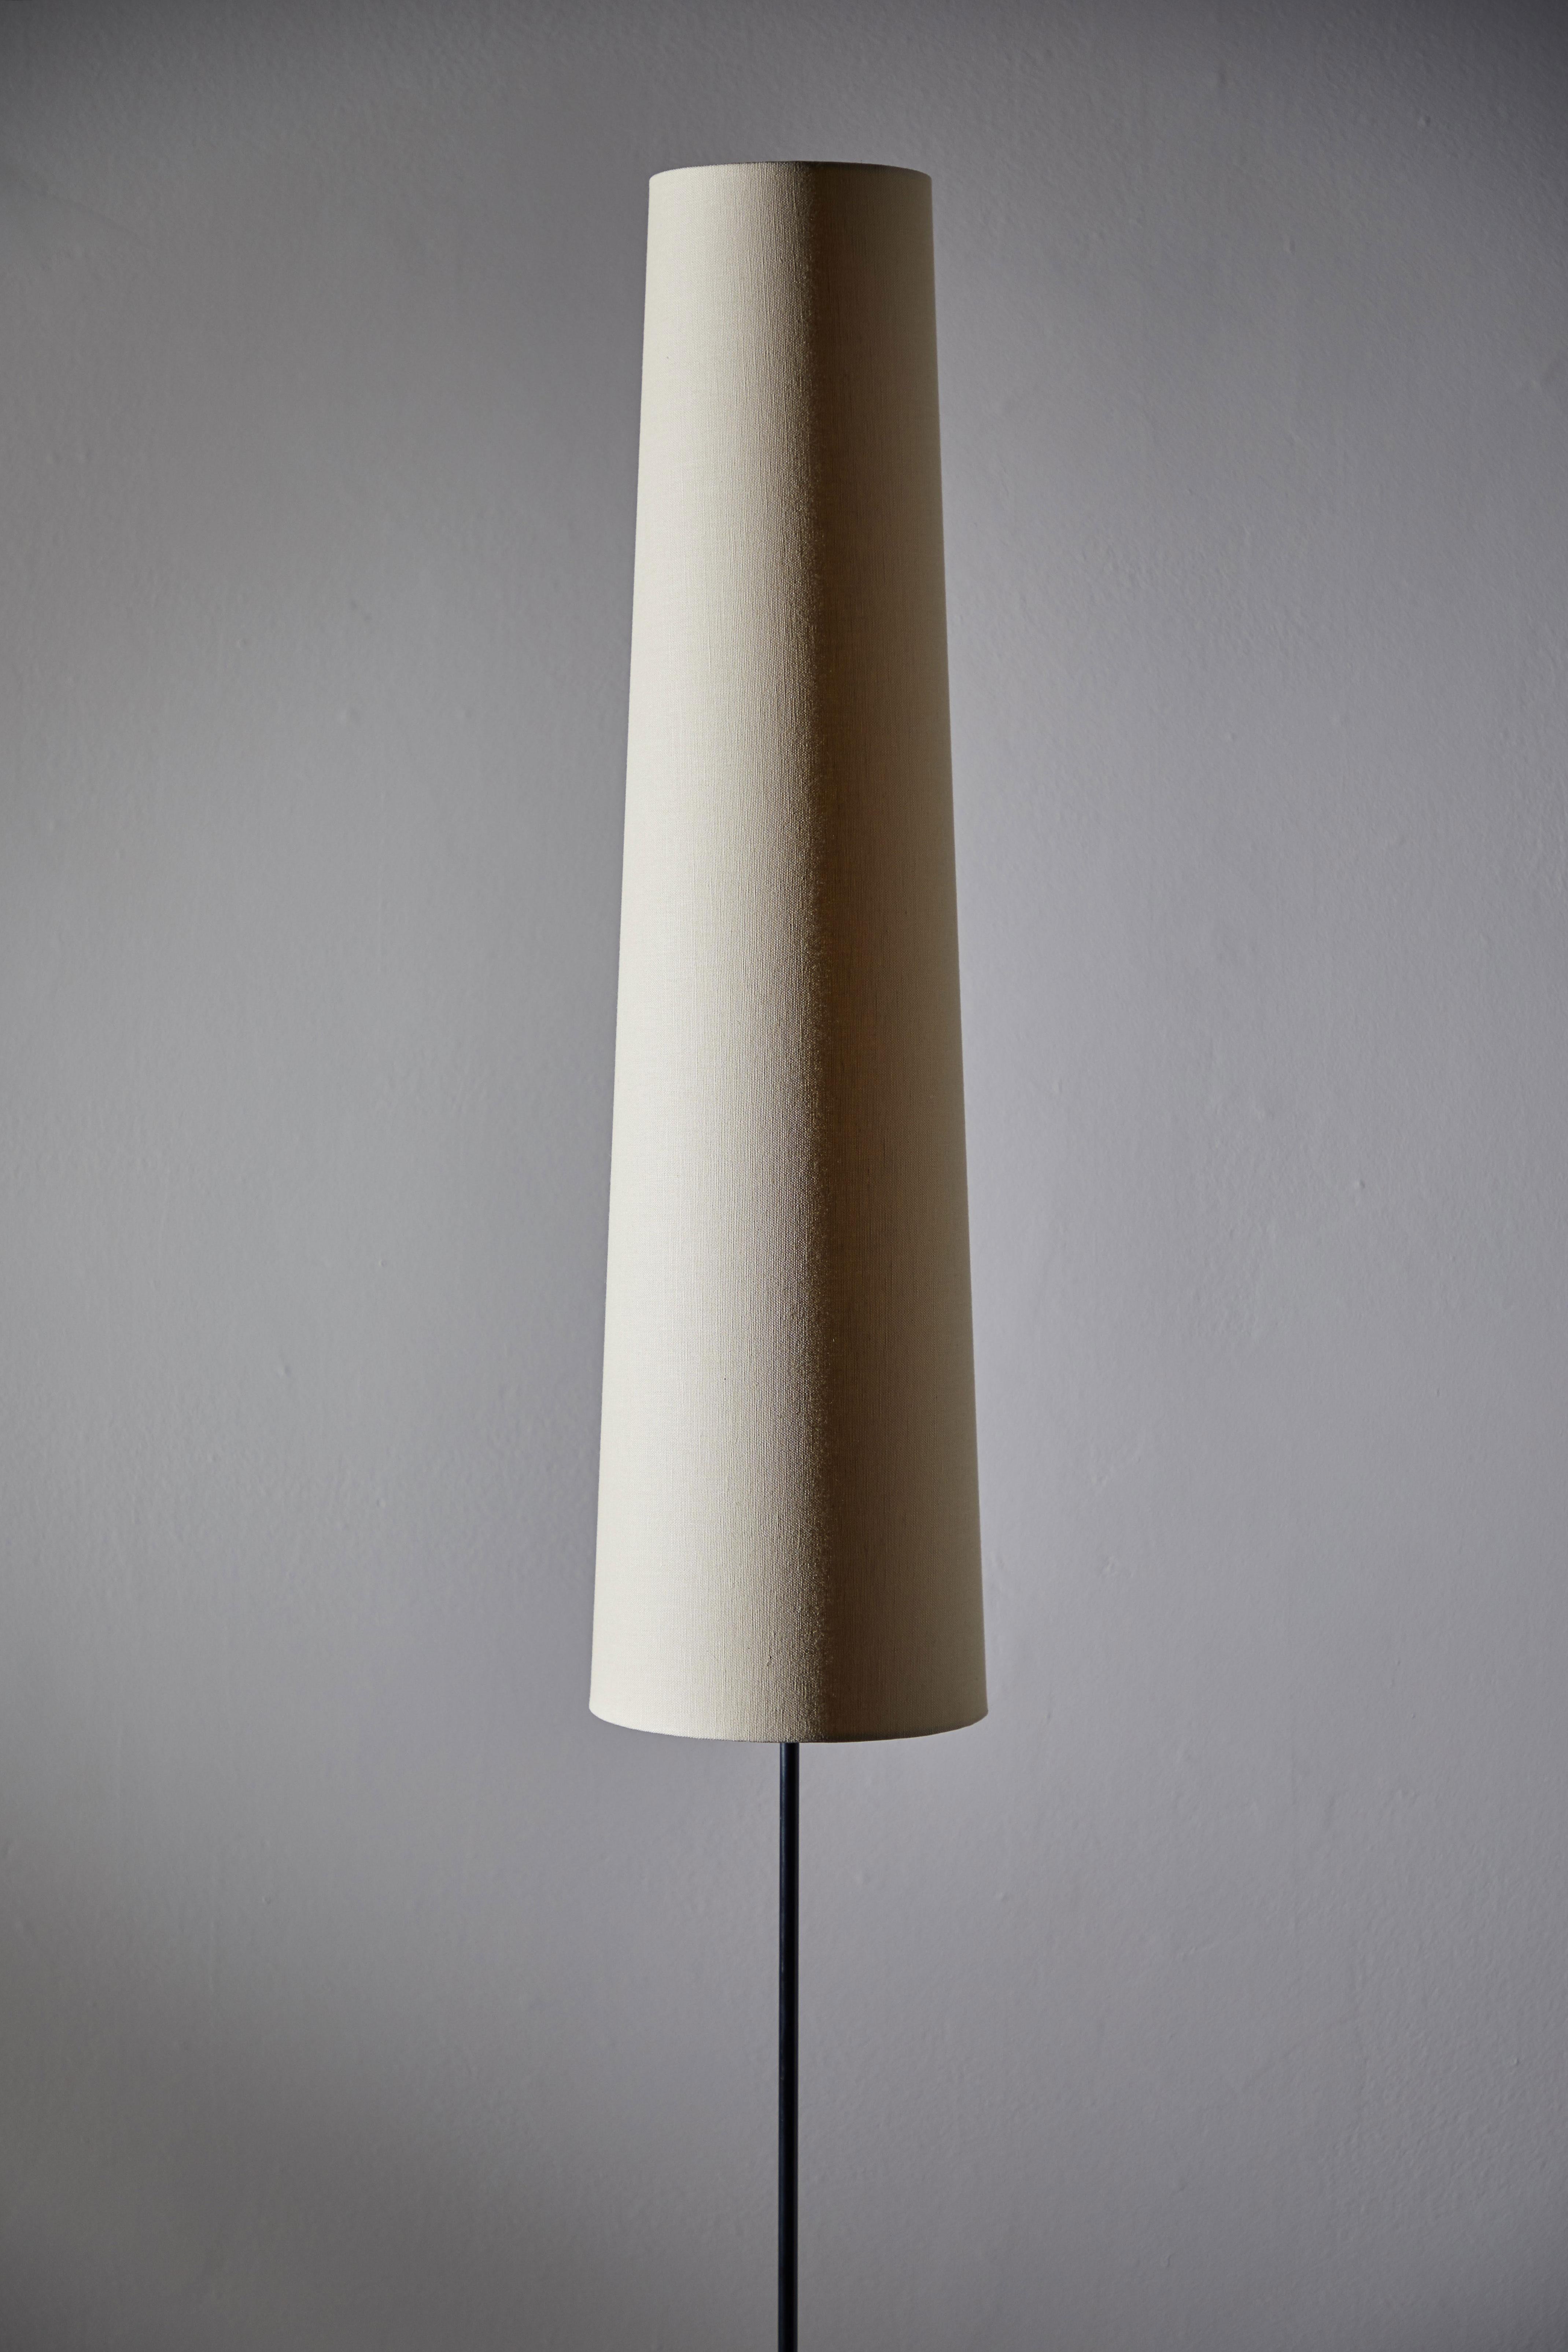 Mid-20th Century Floor Lamp by Svend Aage Holm Sørensen